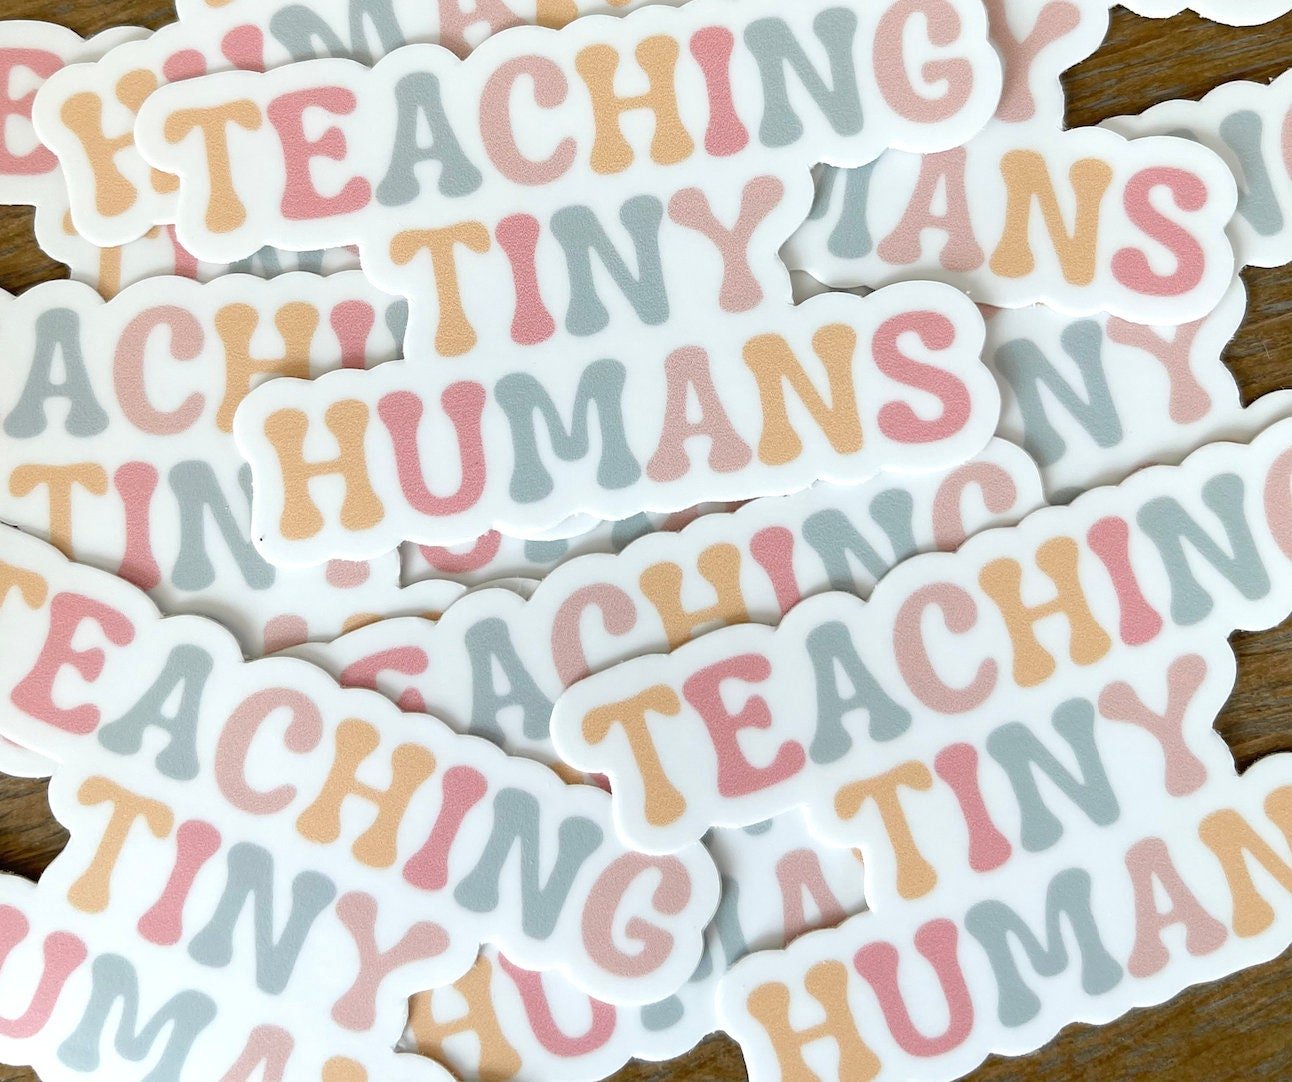 Teaching Tiny Humans Sticker | Hydroflask Sticker | Teacher gift | Laptop Sticker | Back to School | Water bottle Sticker | Teacher Stickers - Shop Donuts and Daisies